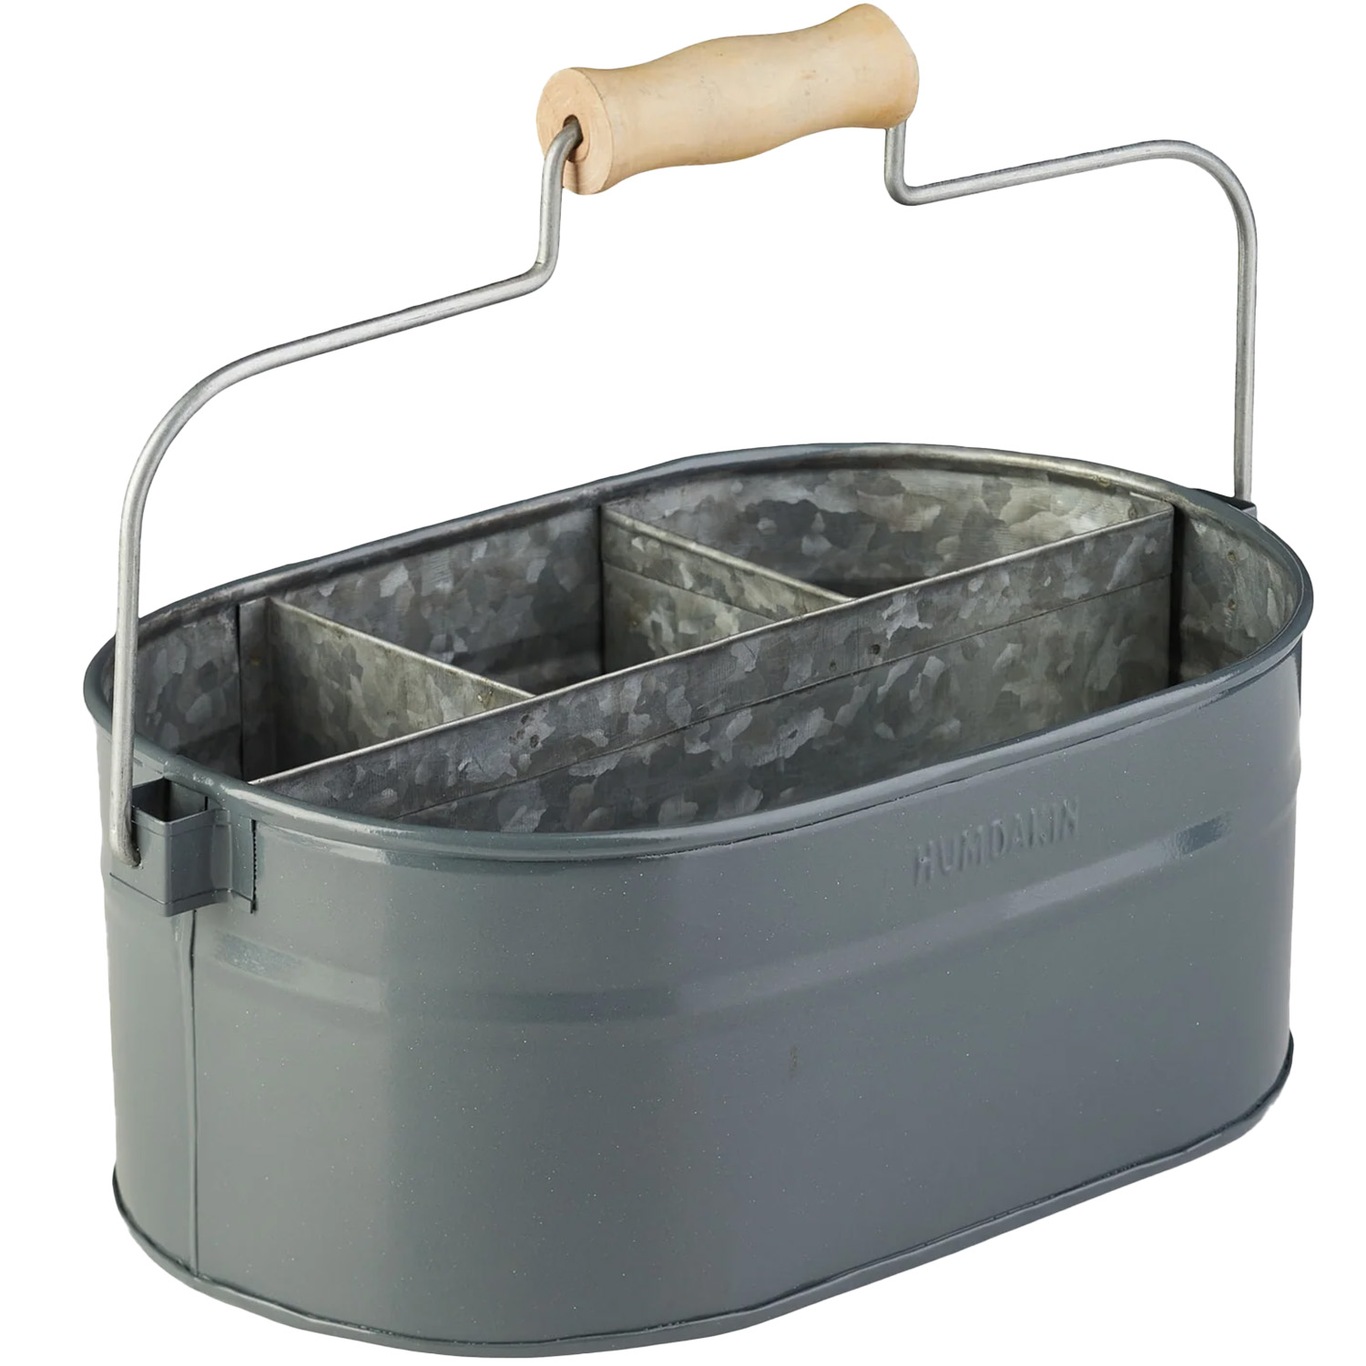 System Bucket Storage, Grey